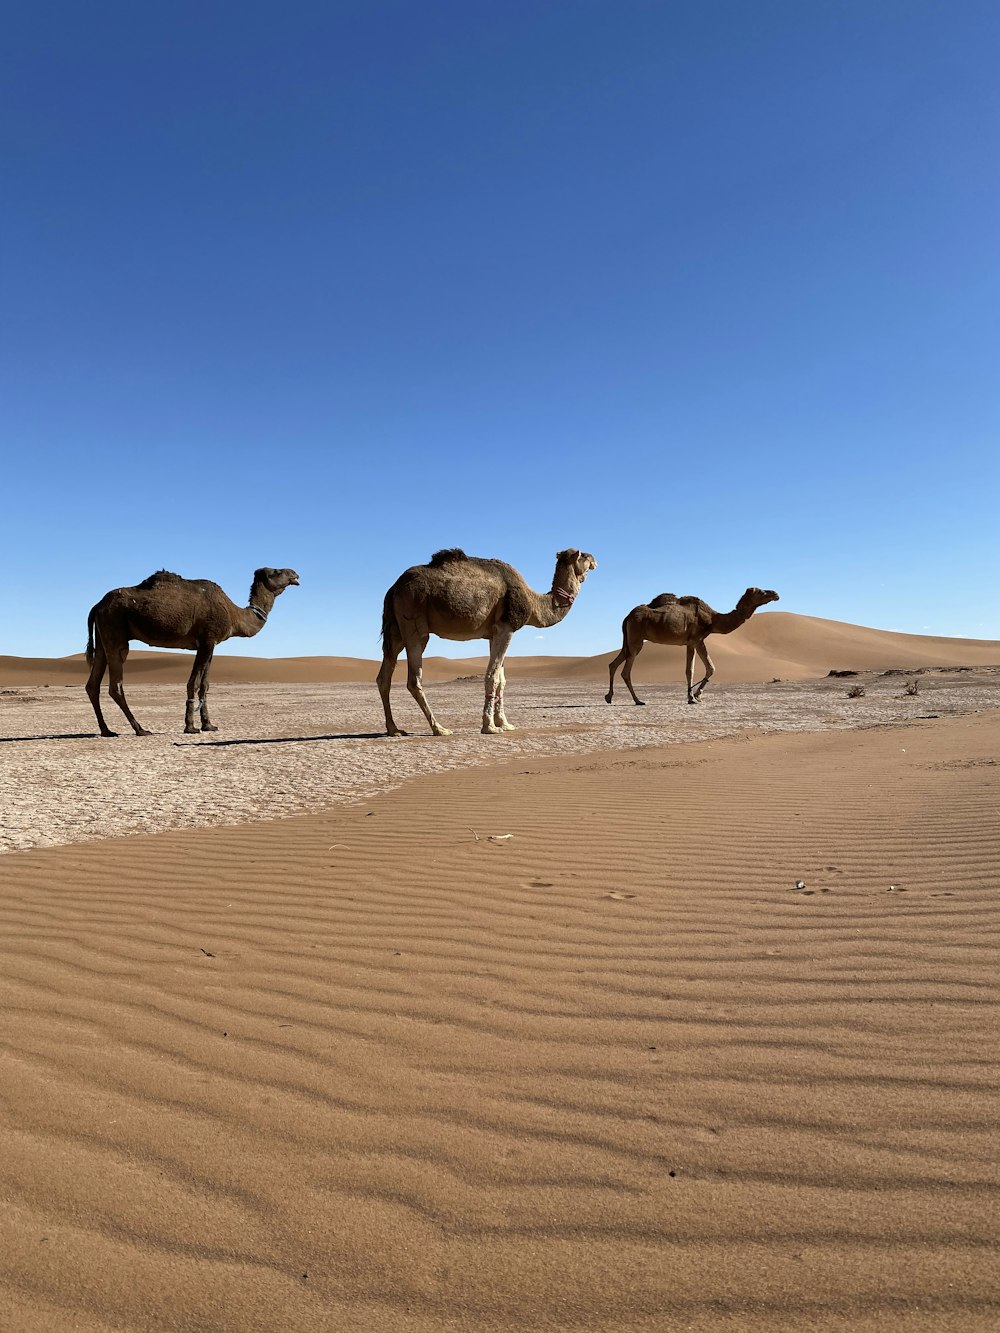 a group of camels walking across a desert